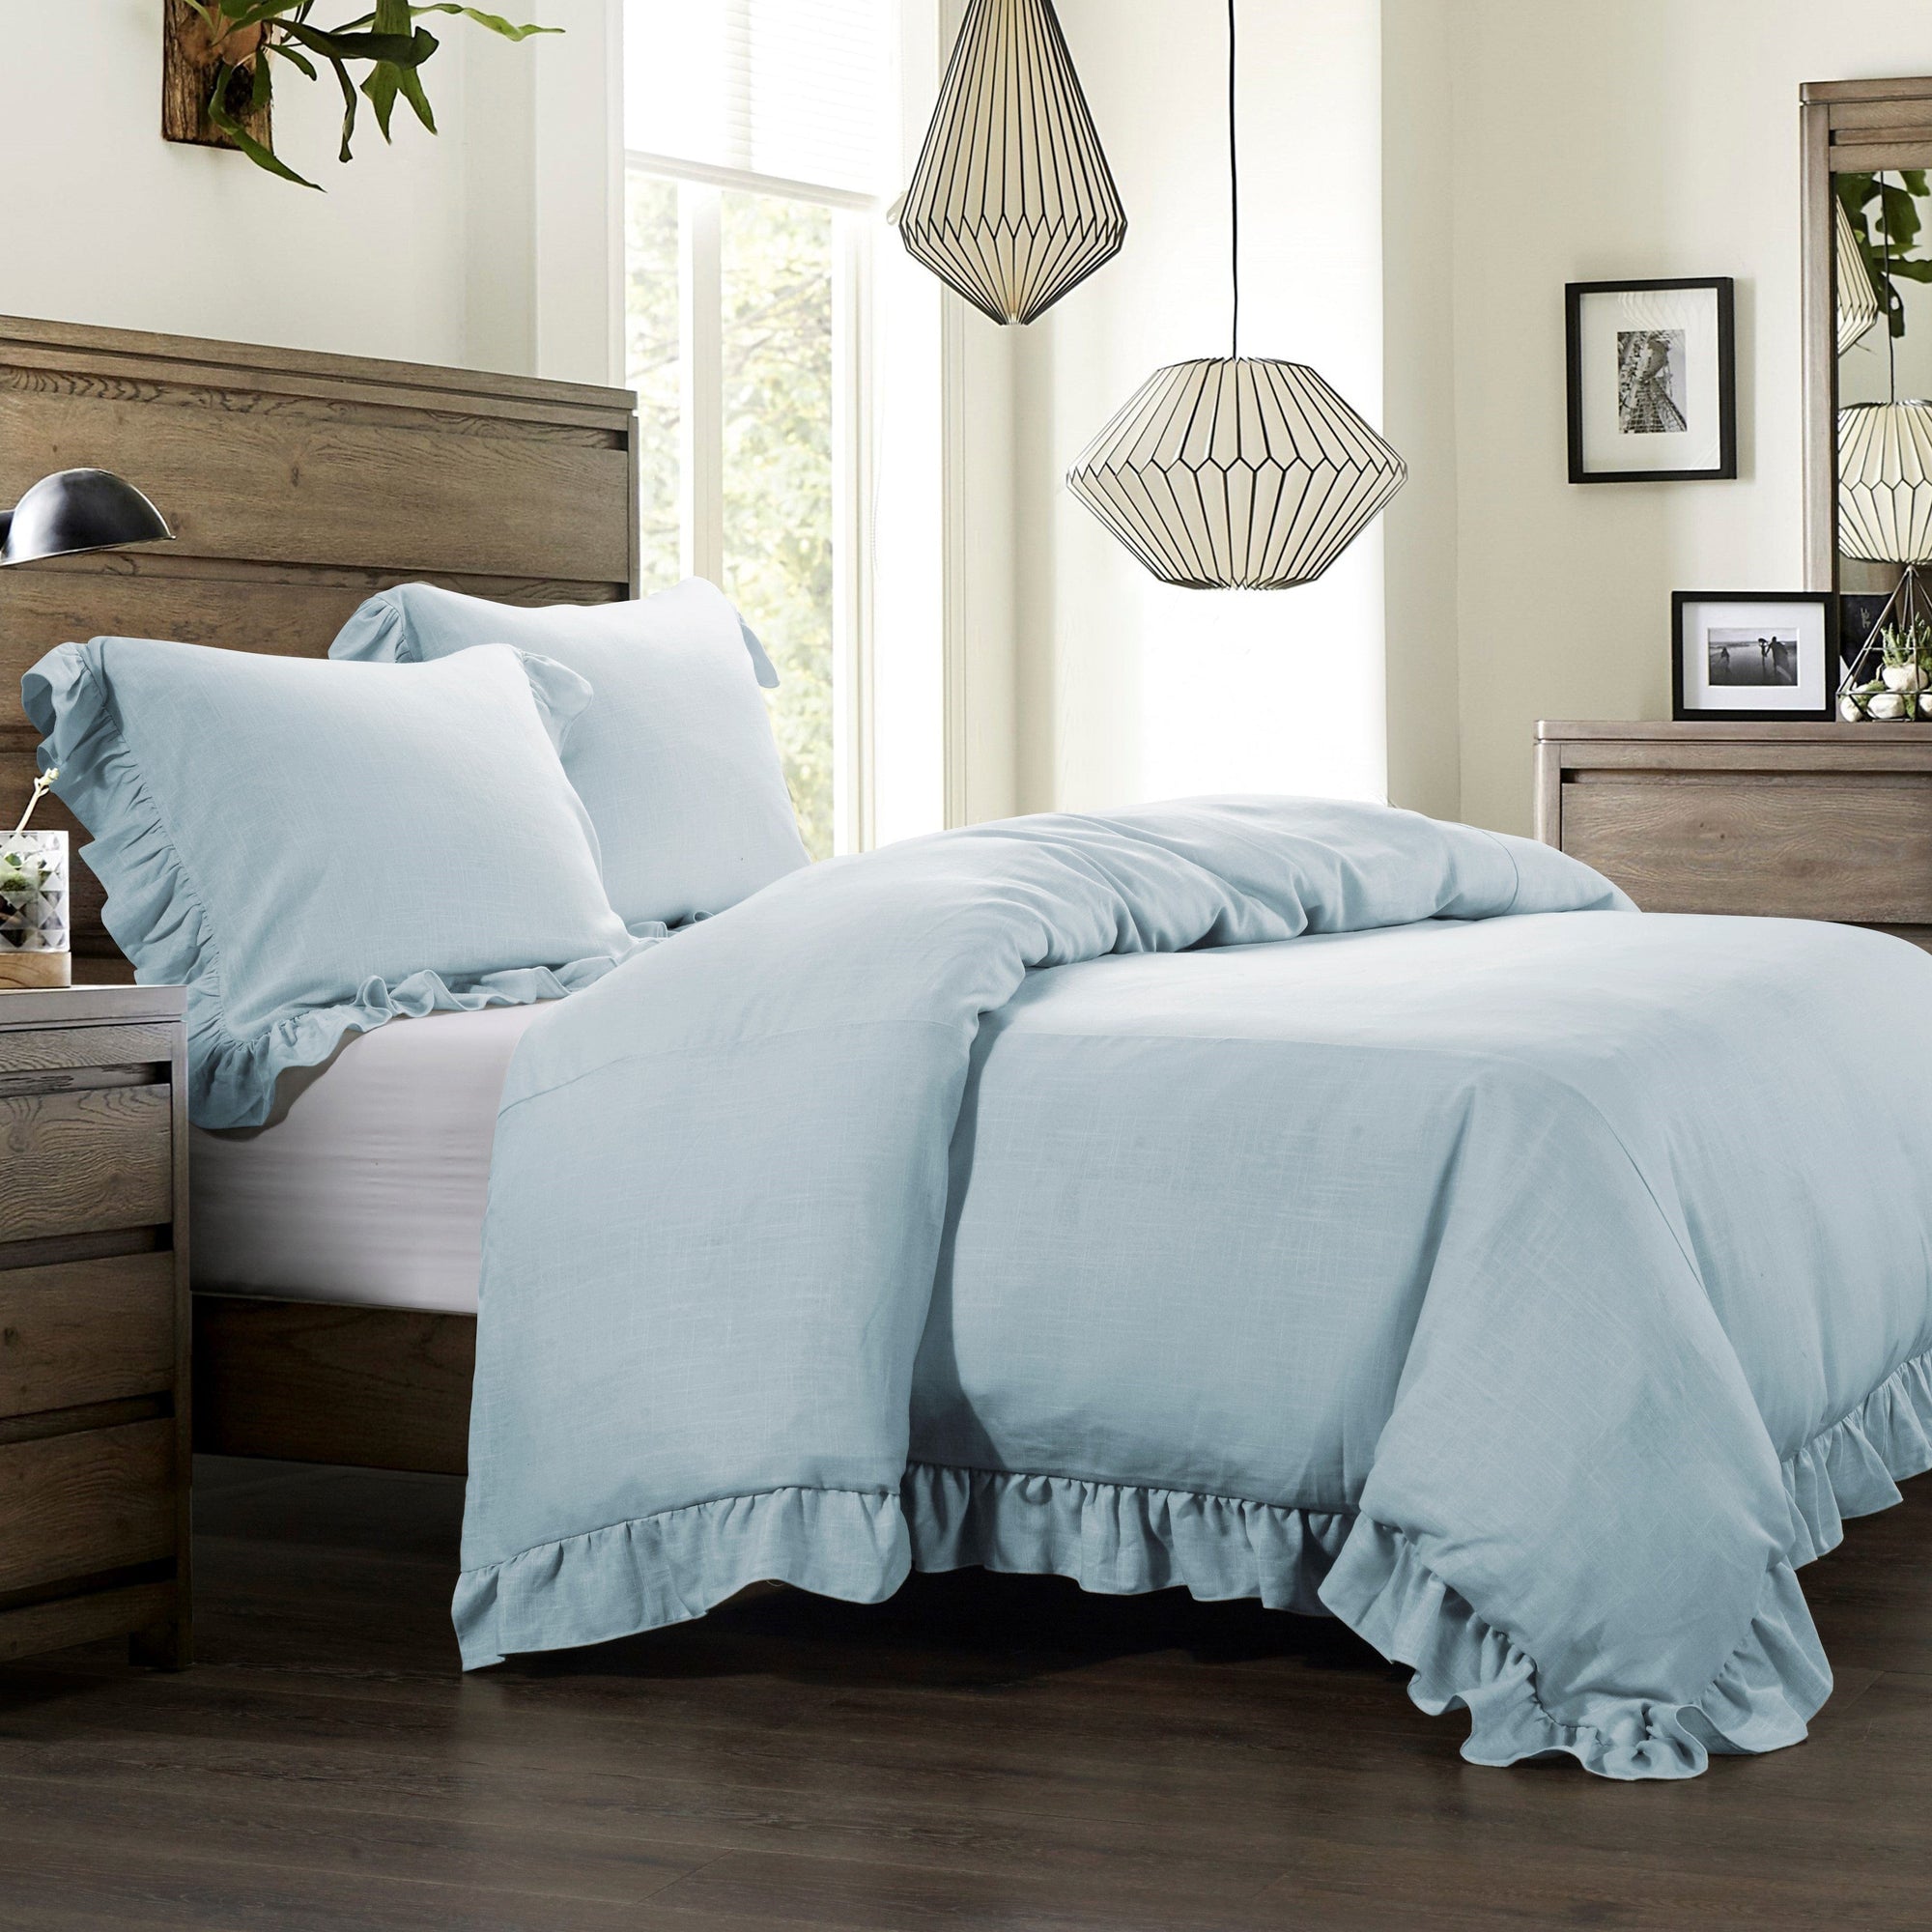 Lily Washed Linen Ruffled Bedding Set Comforter Set / Super Queen / Light Blue Comforter / Duvet Cover